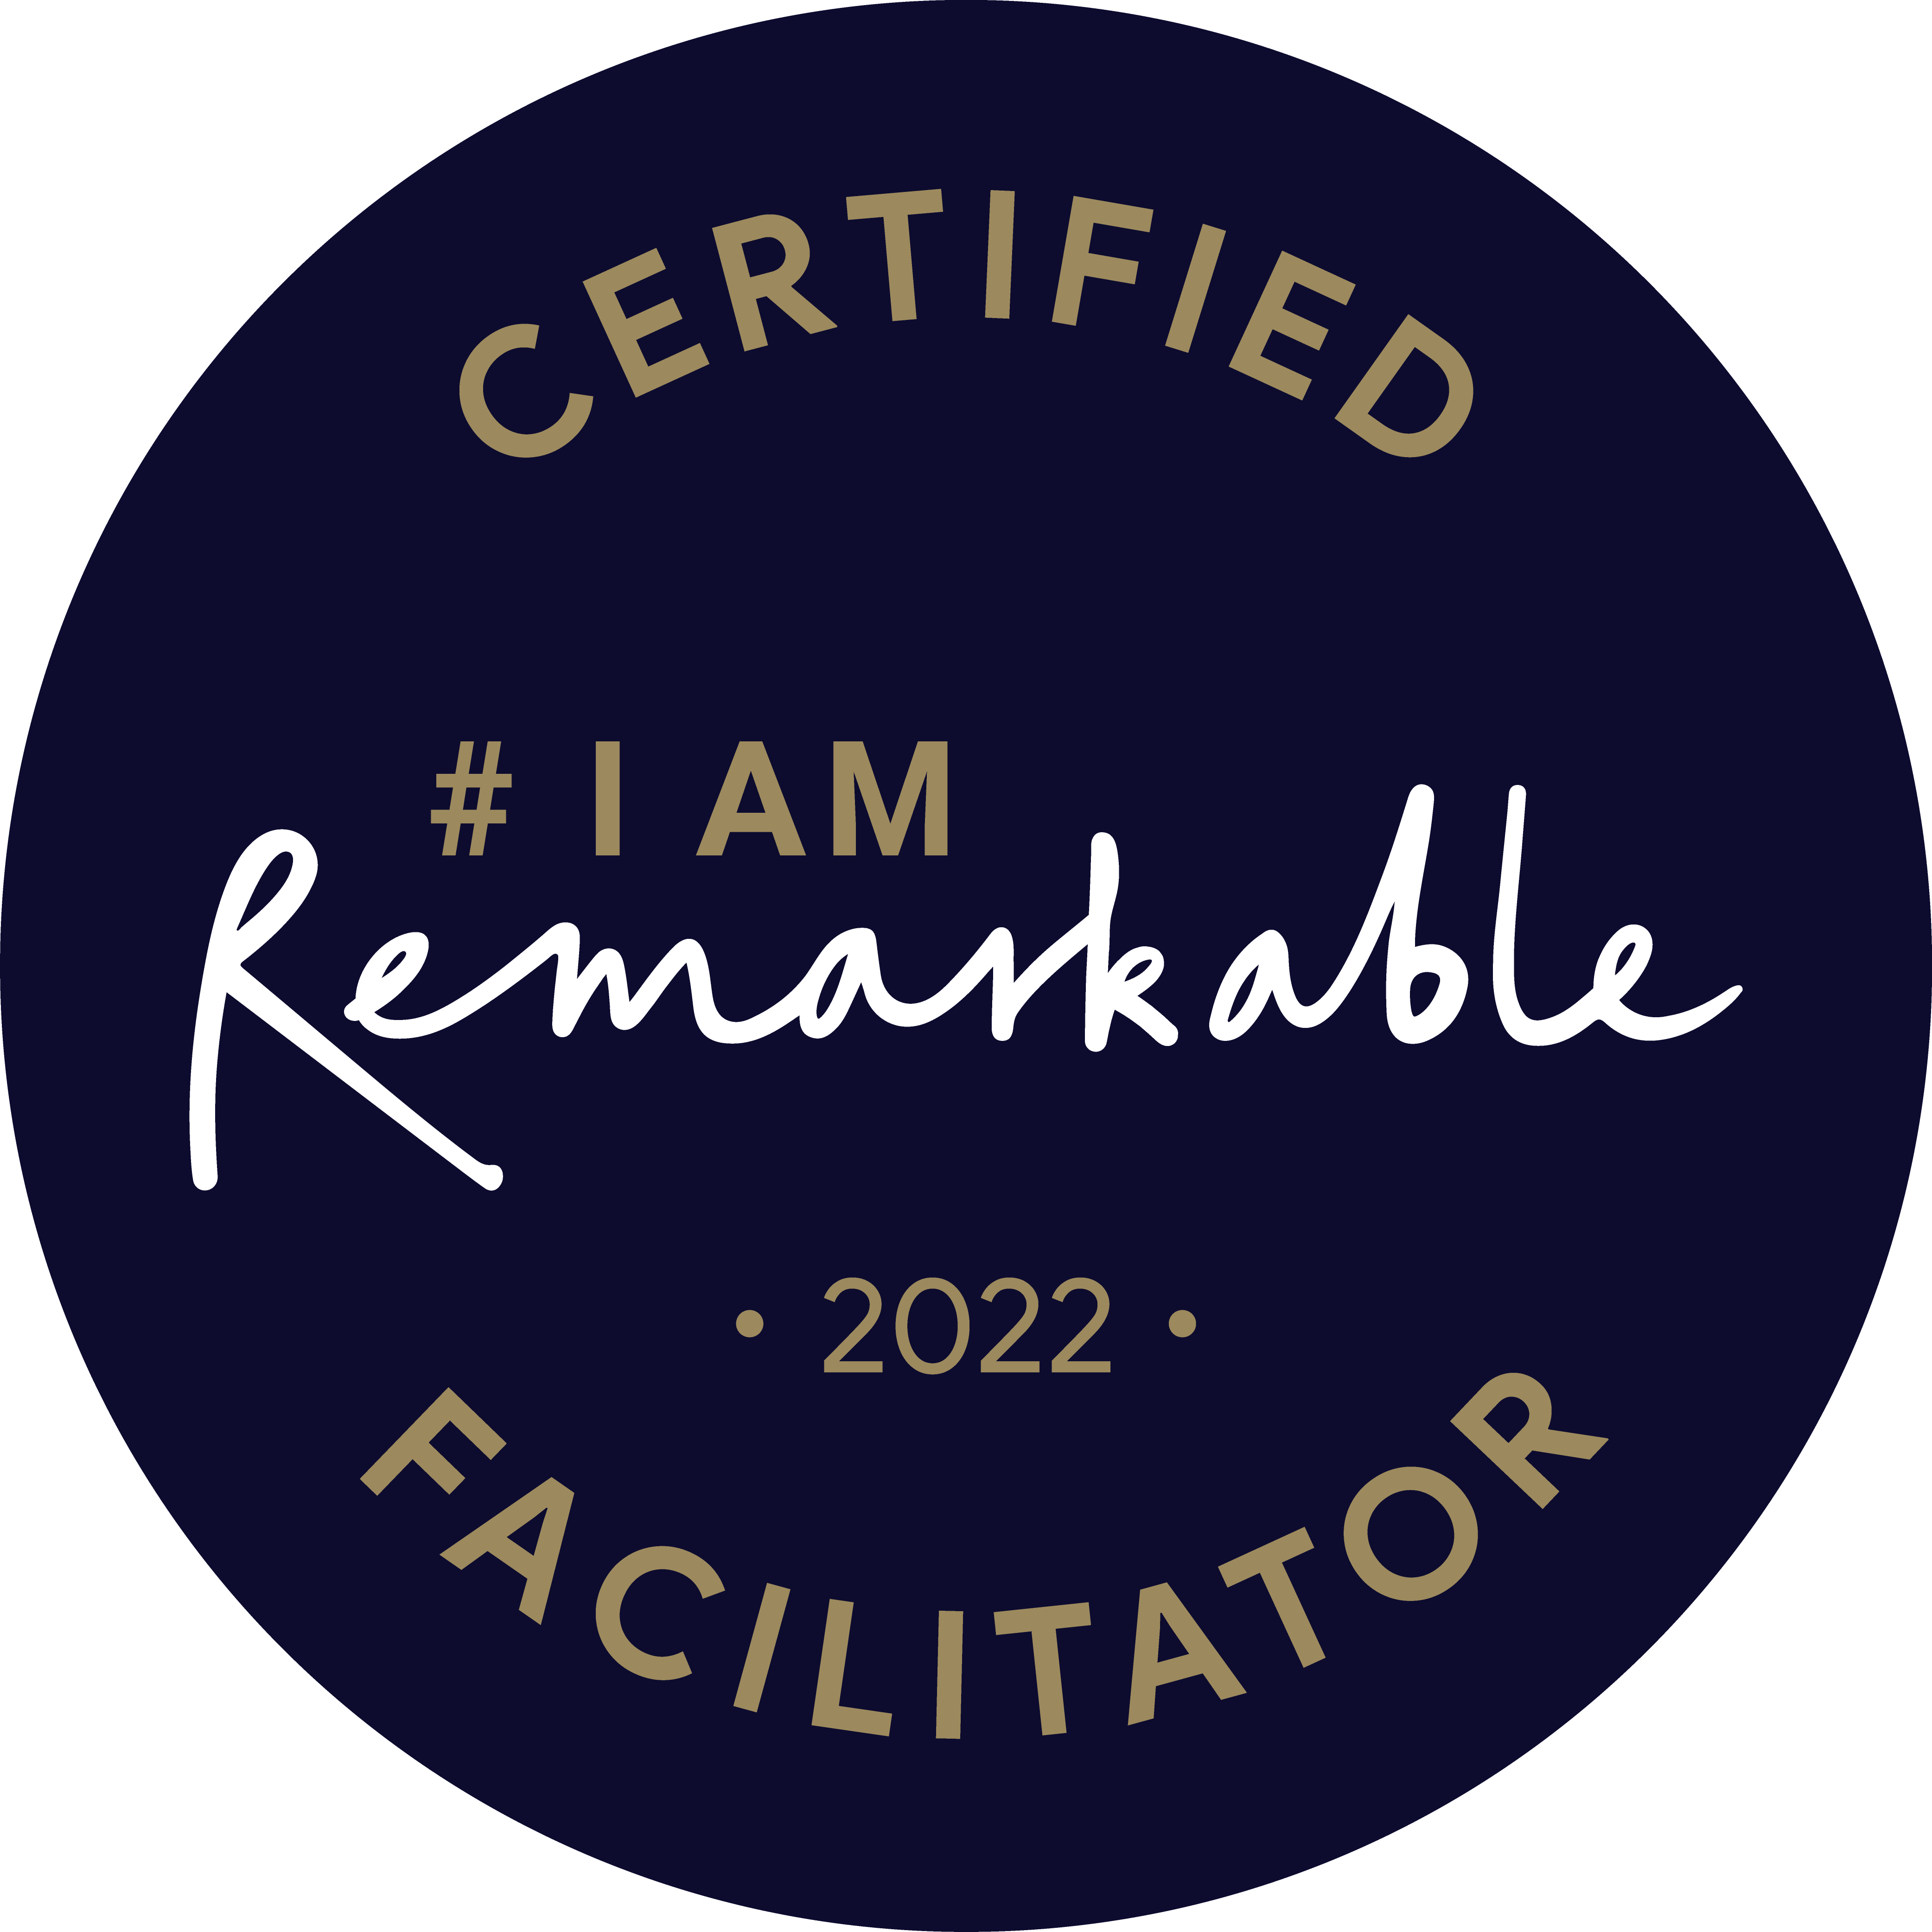 I am Remarkable Facilitator Susan Heaton-Wright g.co/IamRemarkable